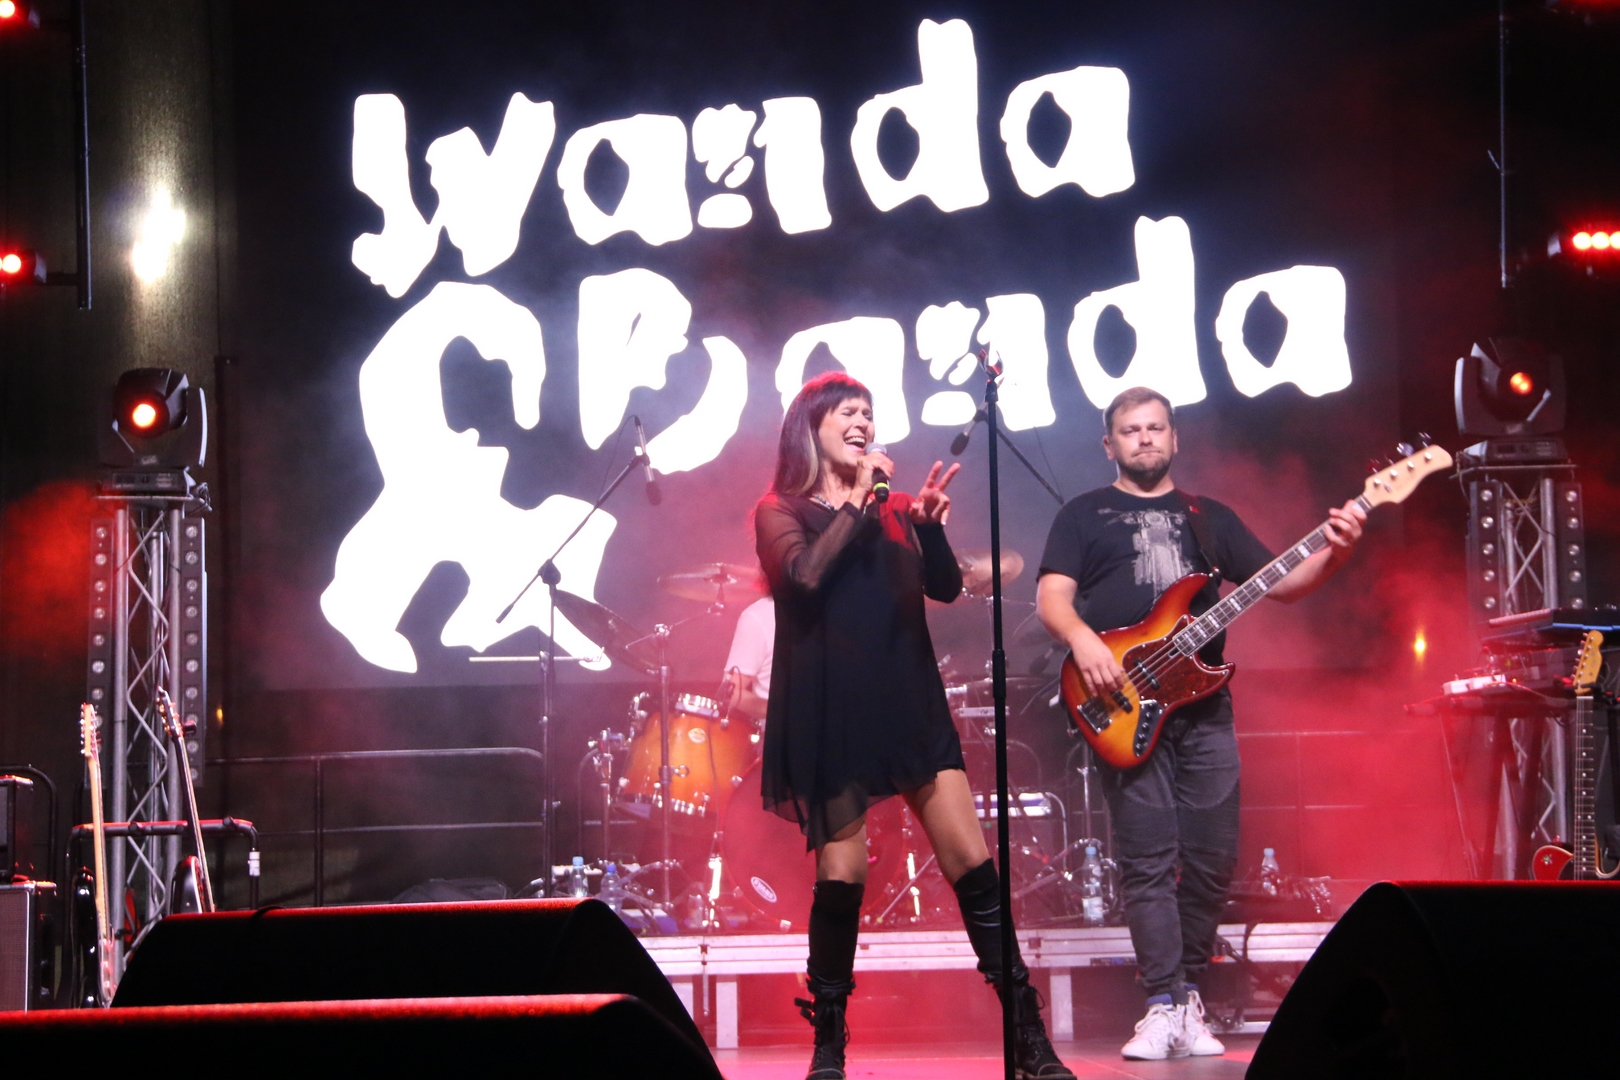 Wanda i Banda images